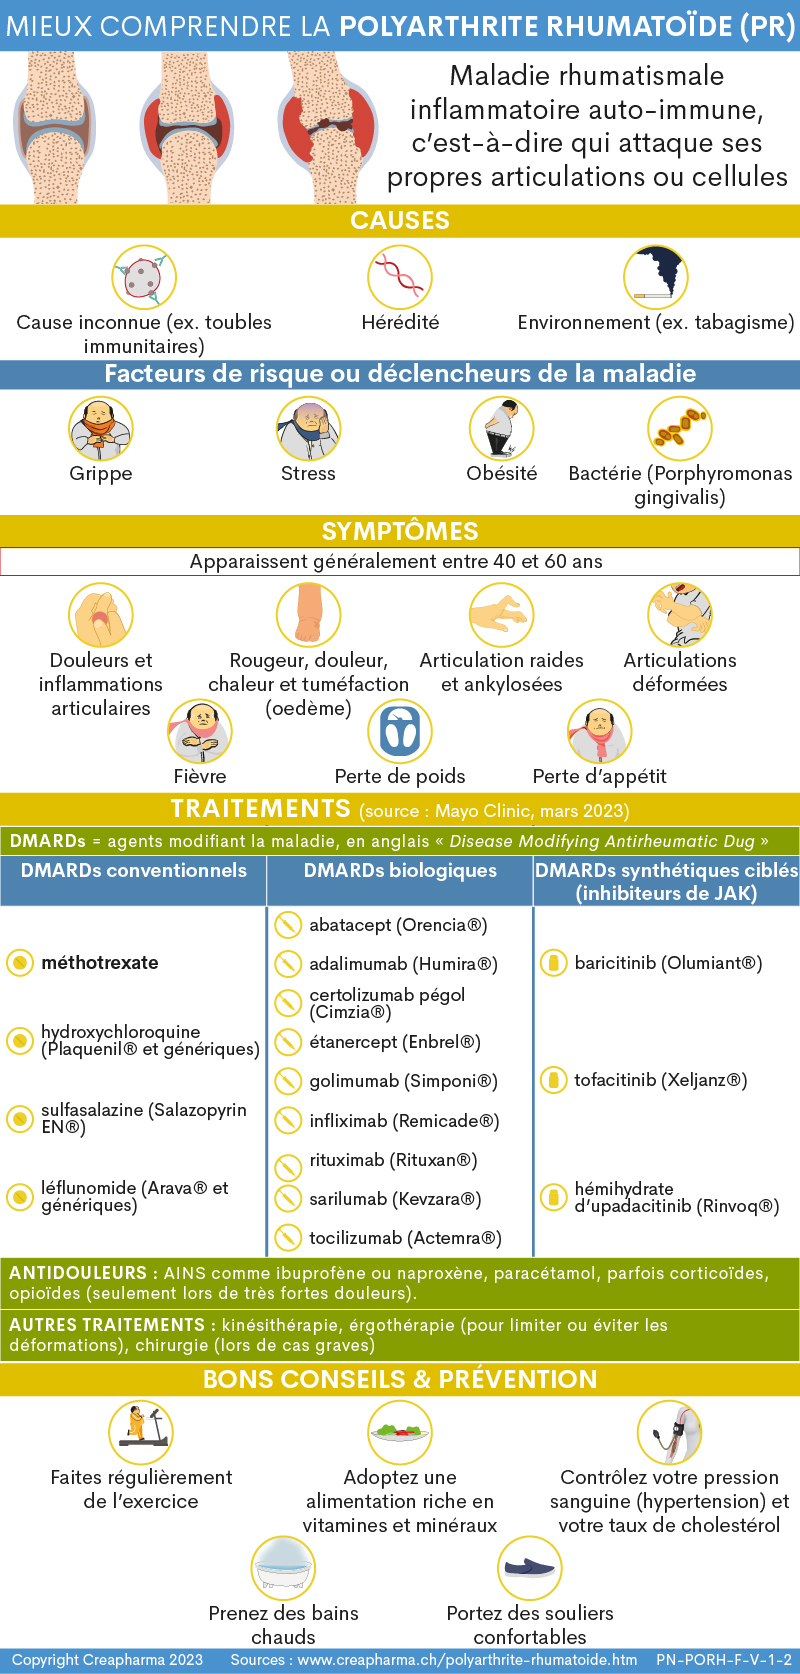 Polyarthrite rhumatoïde: causes, symptômes & traitements | Creapharma